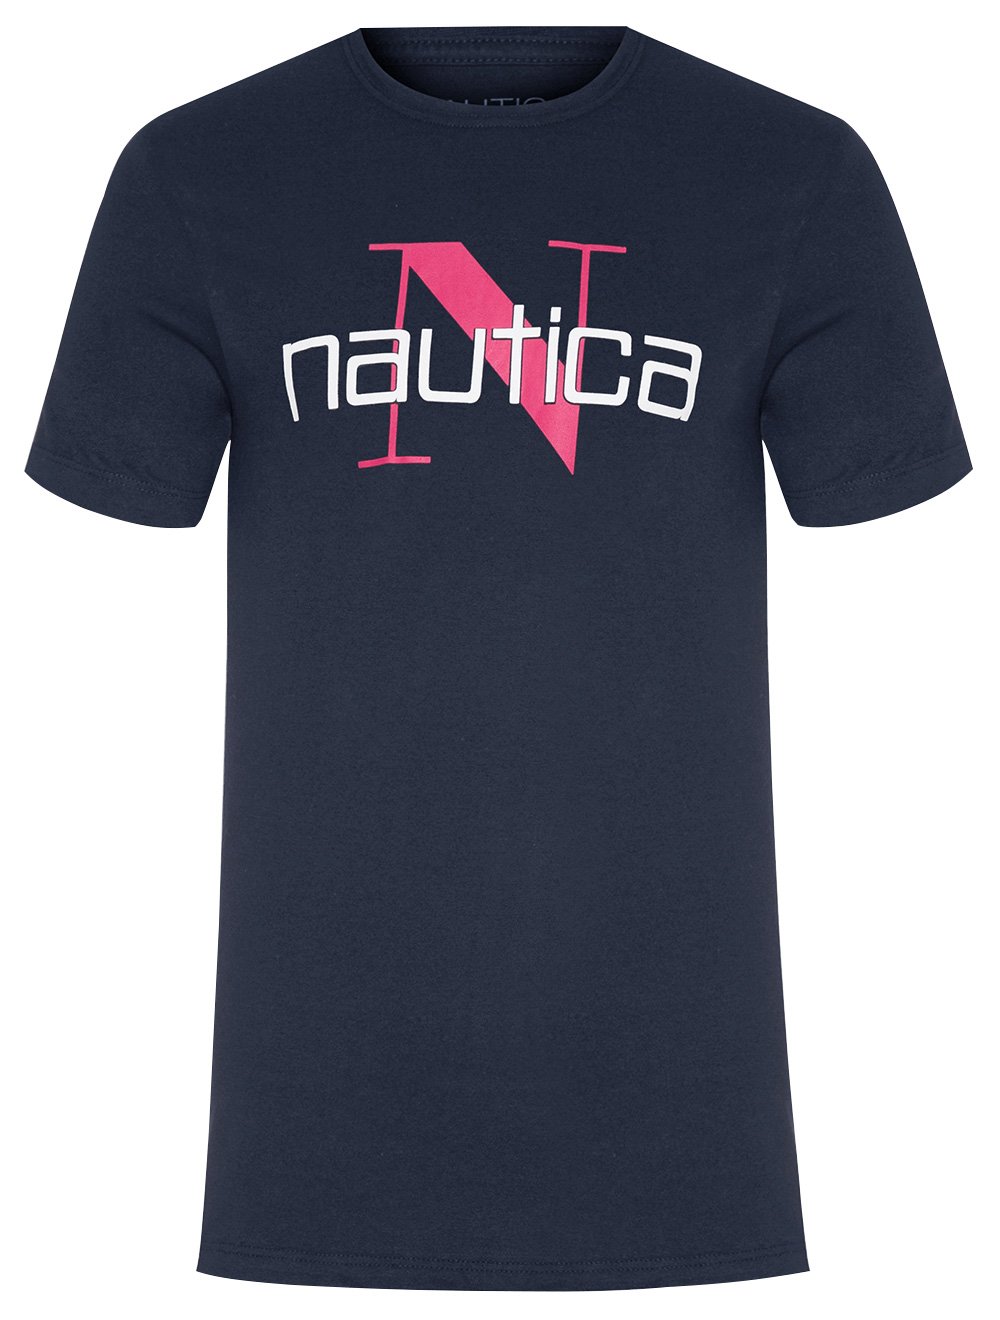 Camiseta Nautica Masculina N Logo Azul Marinho